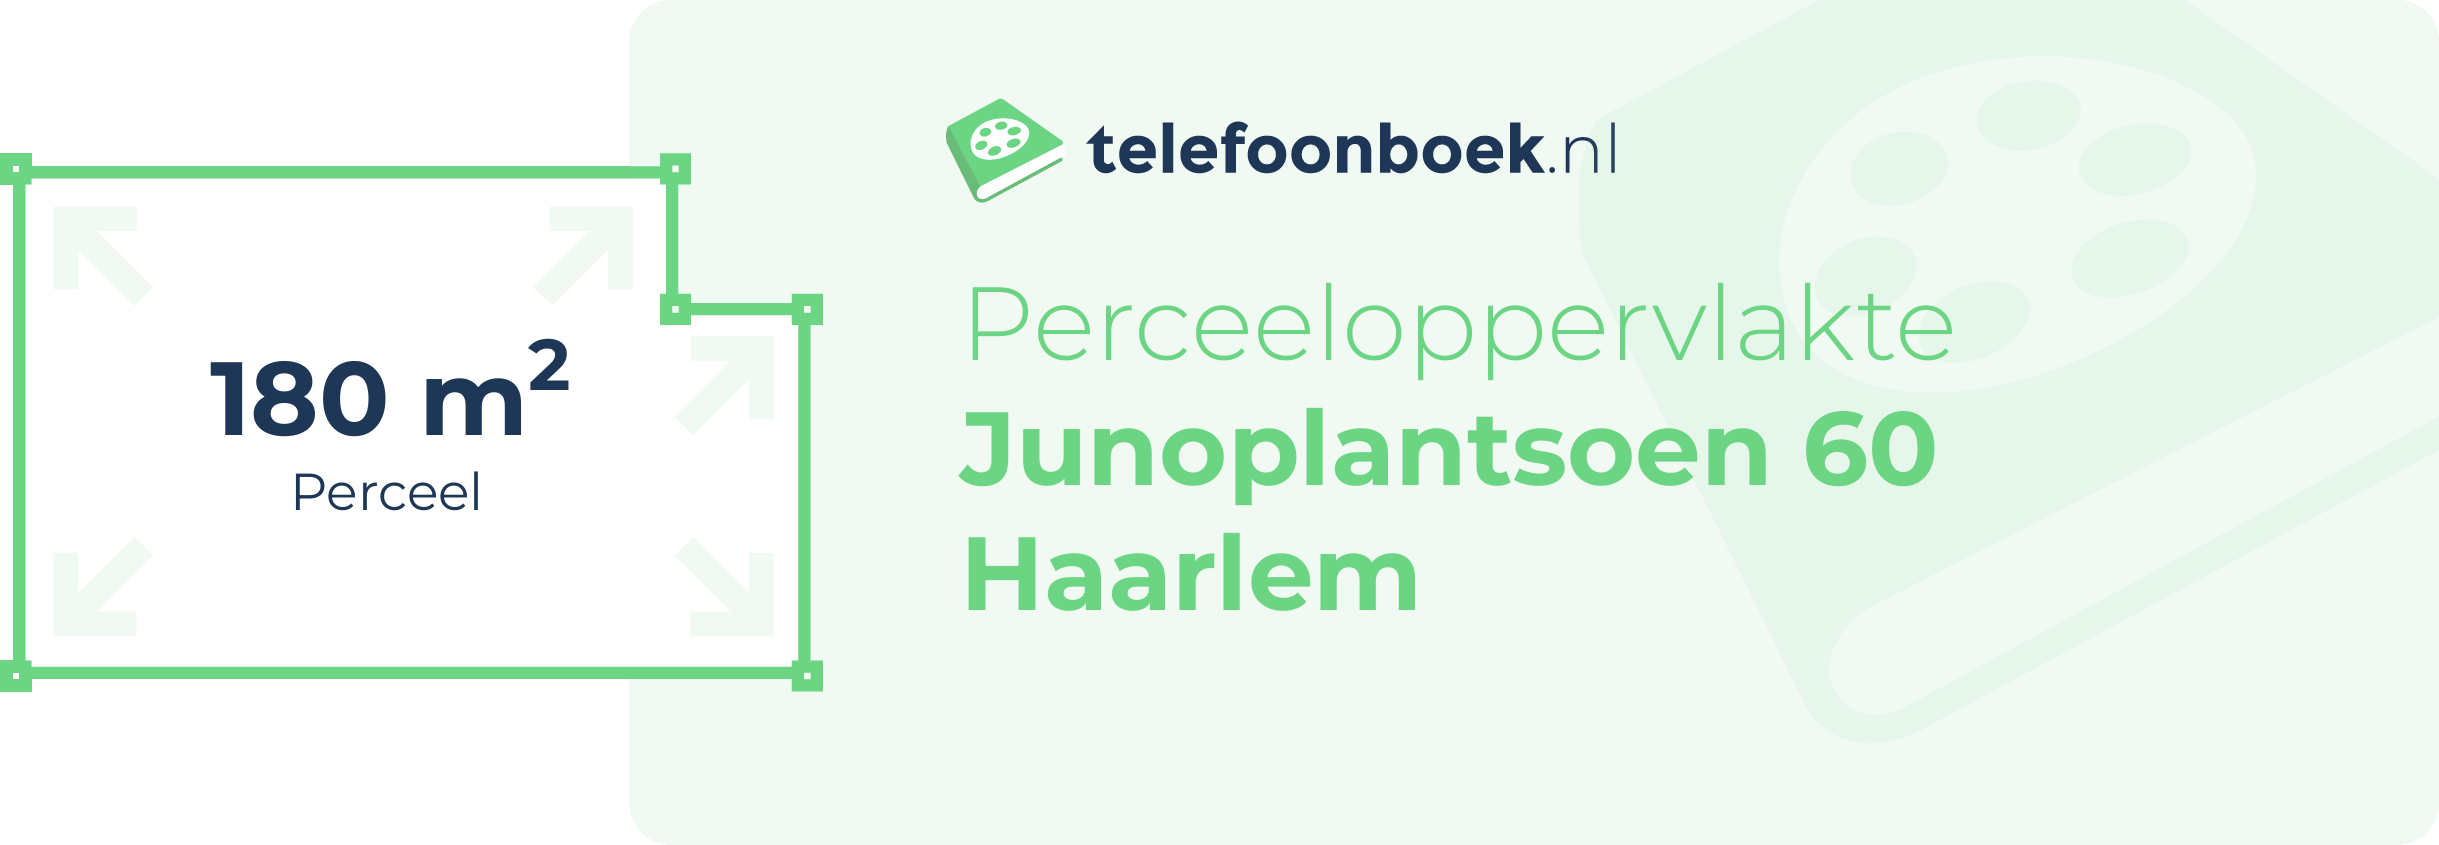 Perceeloppervlakte Junoplantsoen 60 Haarlem